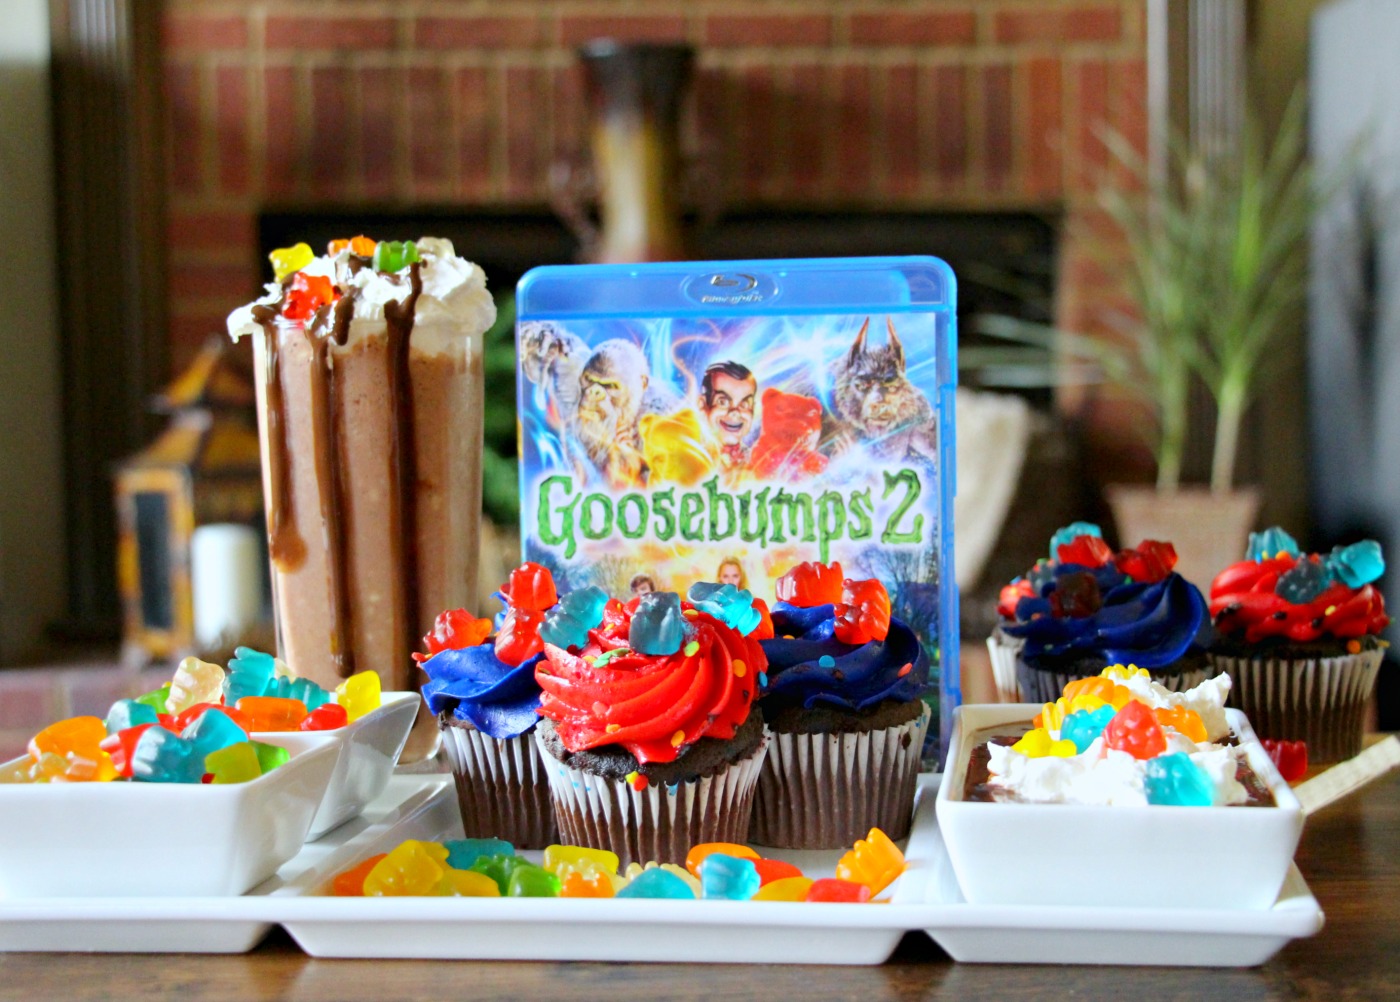 Celebrating Goosebumps 2 With Gummy Bear Snacks